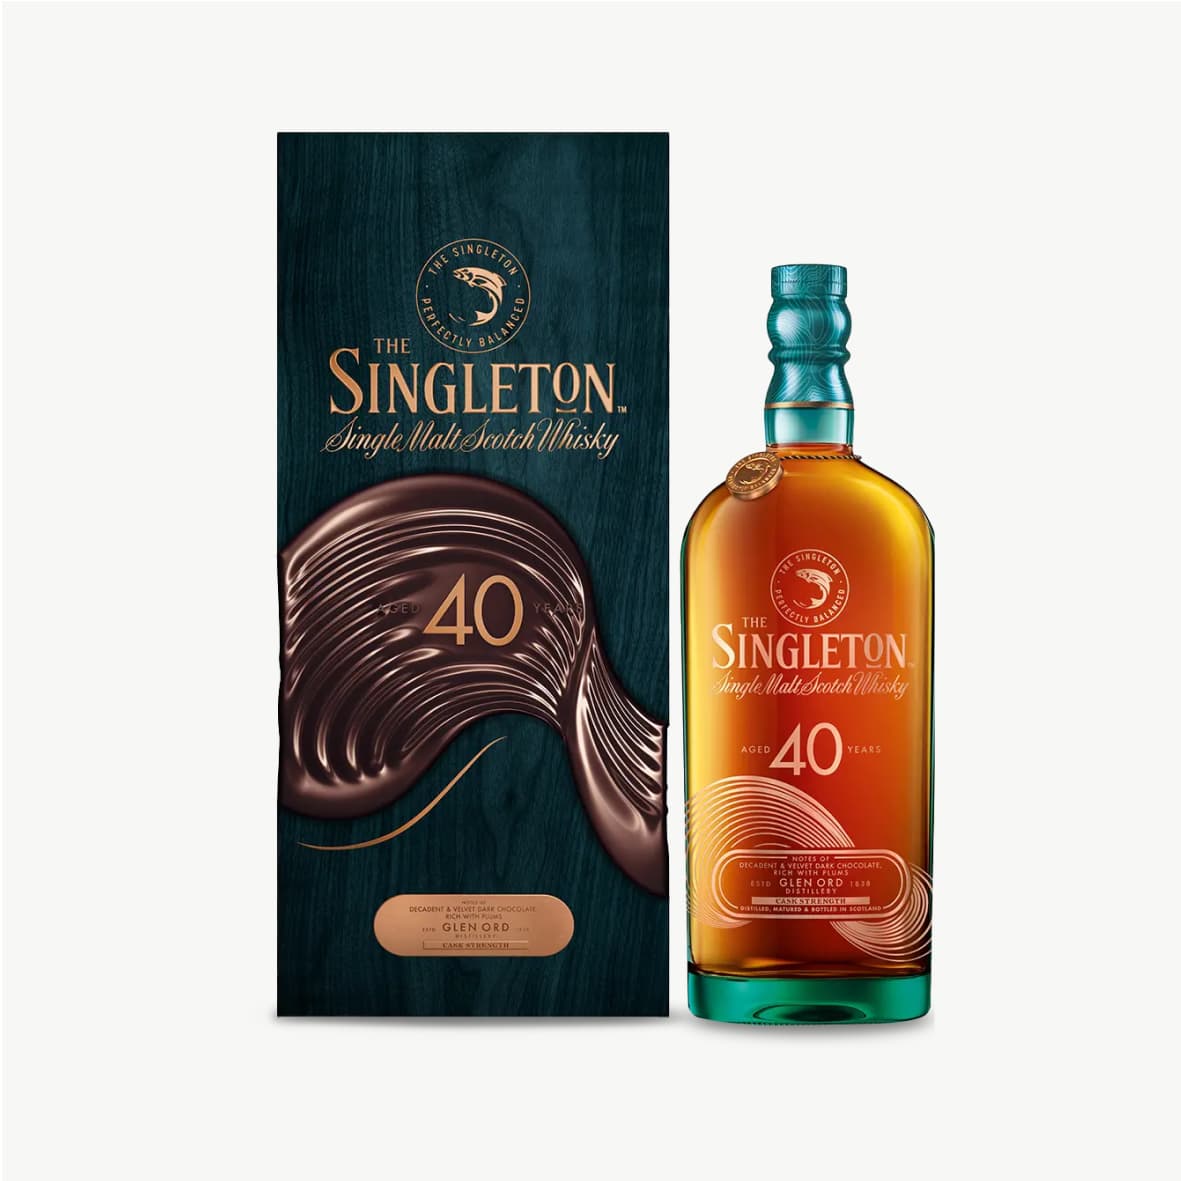 The Singleton of Glen Ord 40 Year Old whisky bottle next to branded case